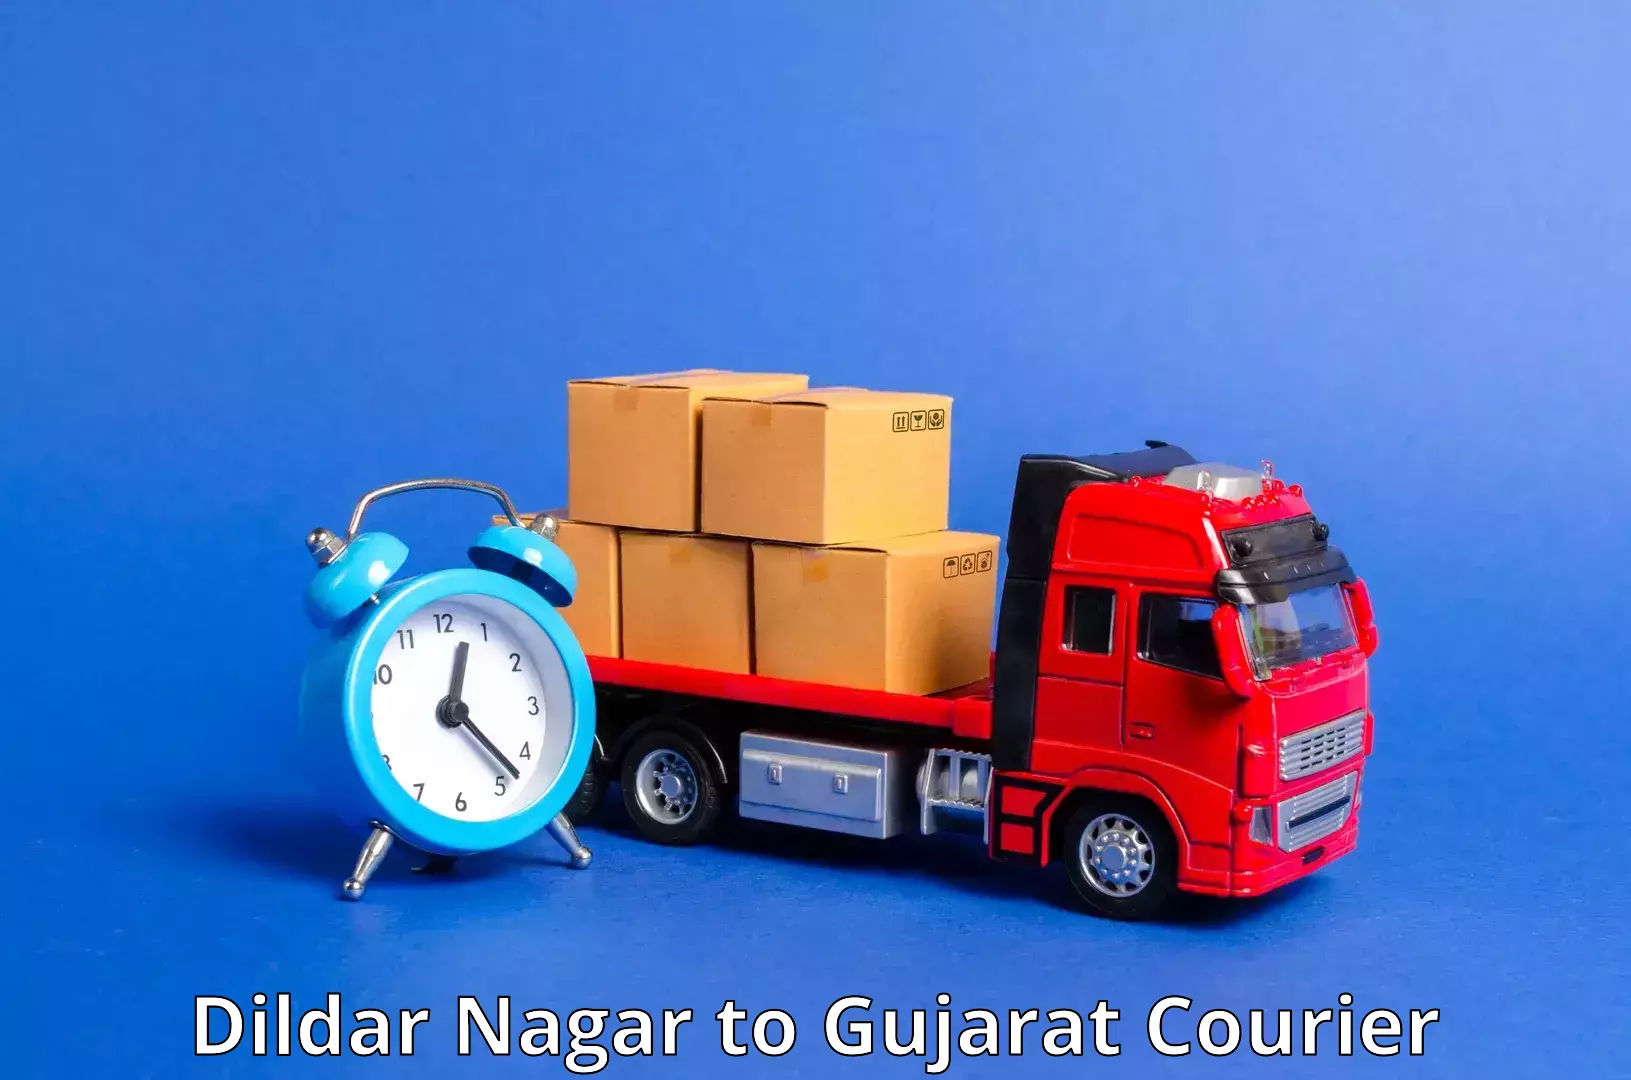 Courier service comparison Dildar Nagar to Bhuj